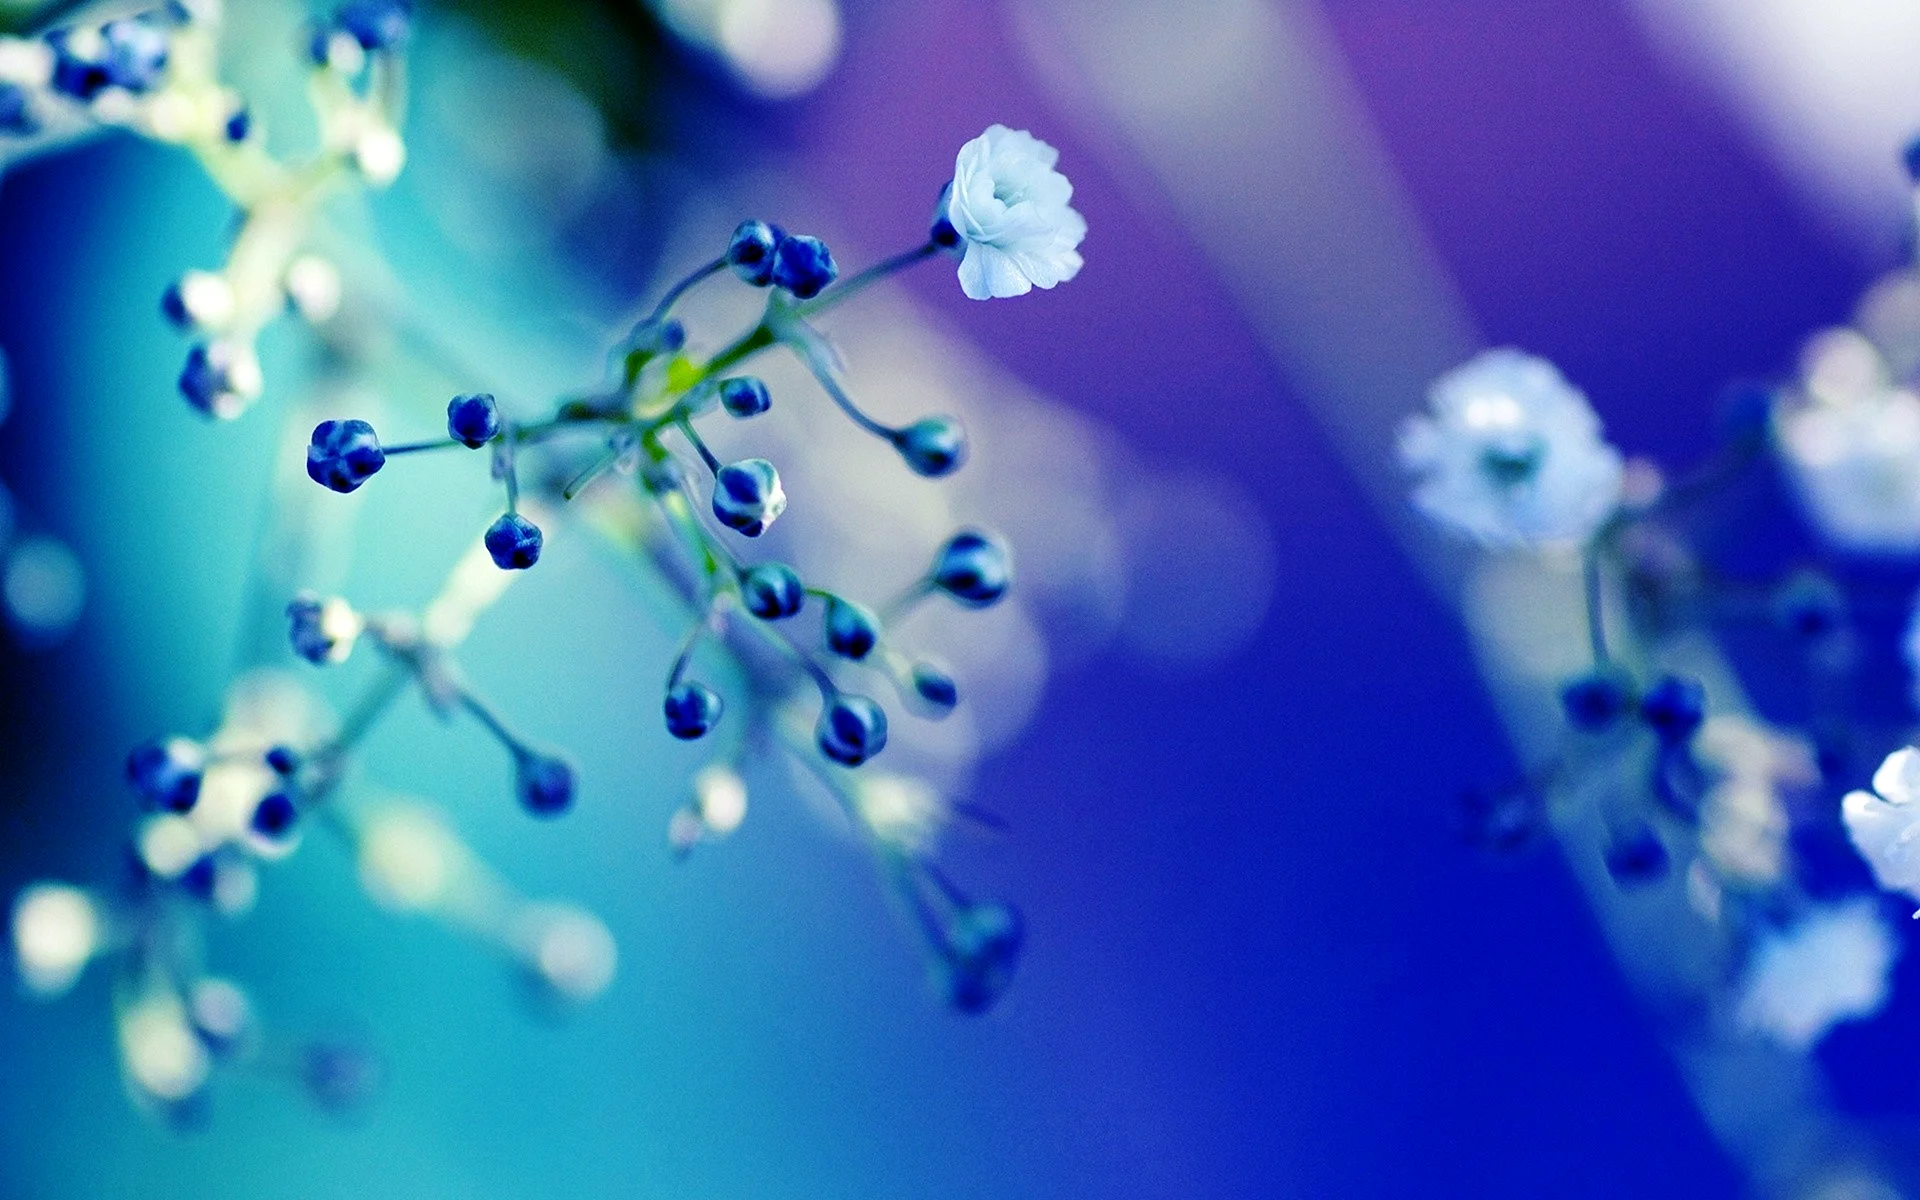 Light Blue Floral Wallpaper